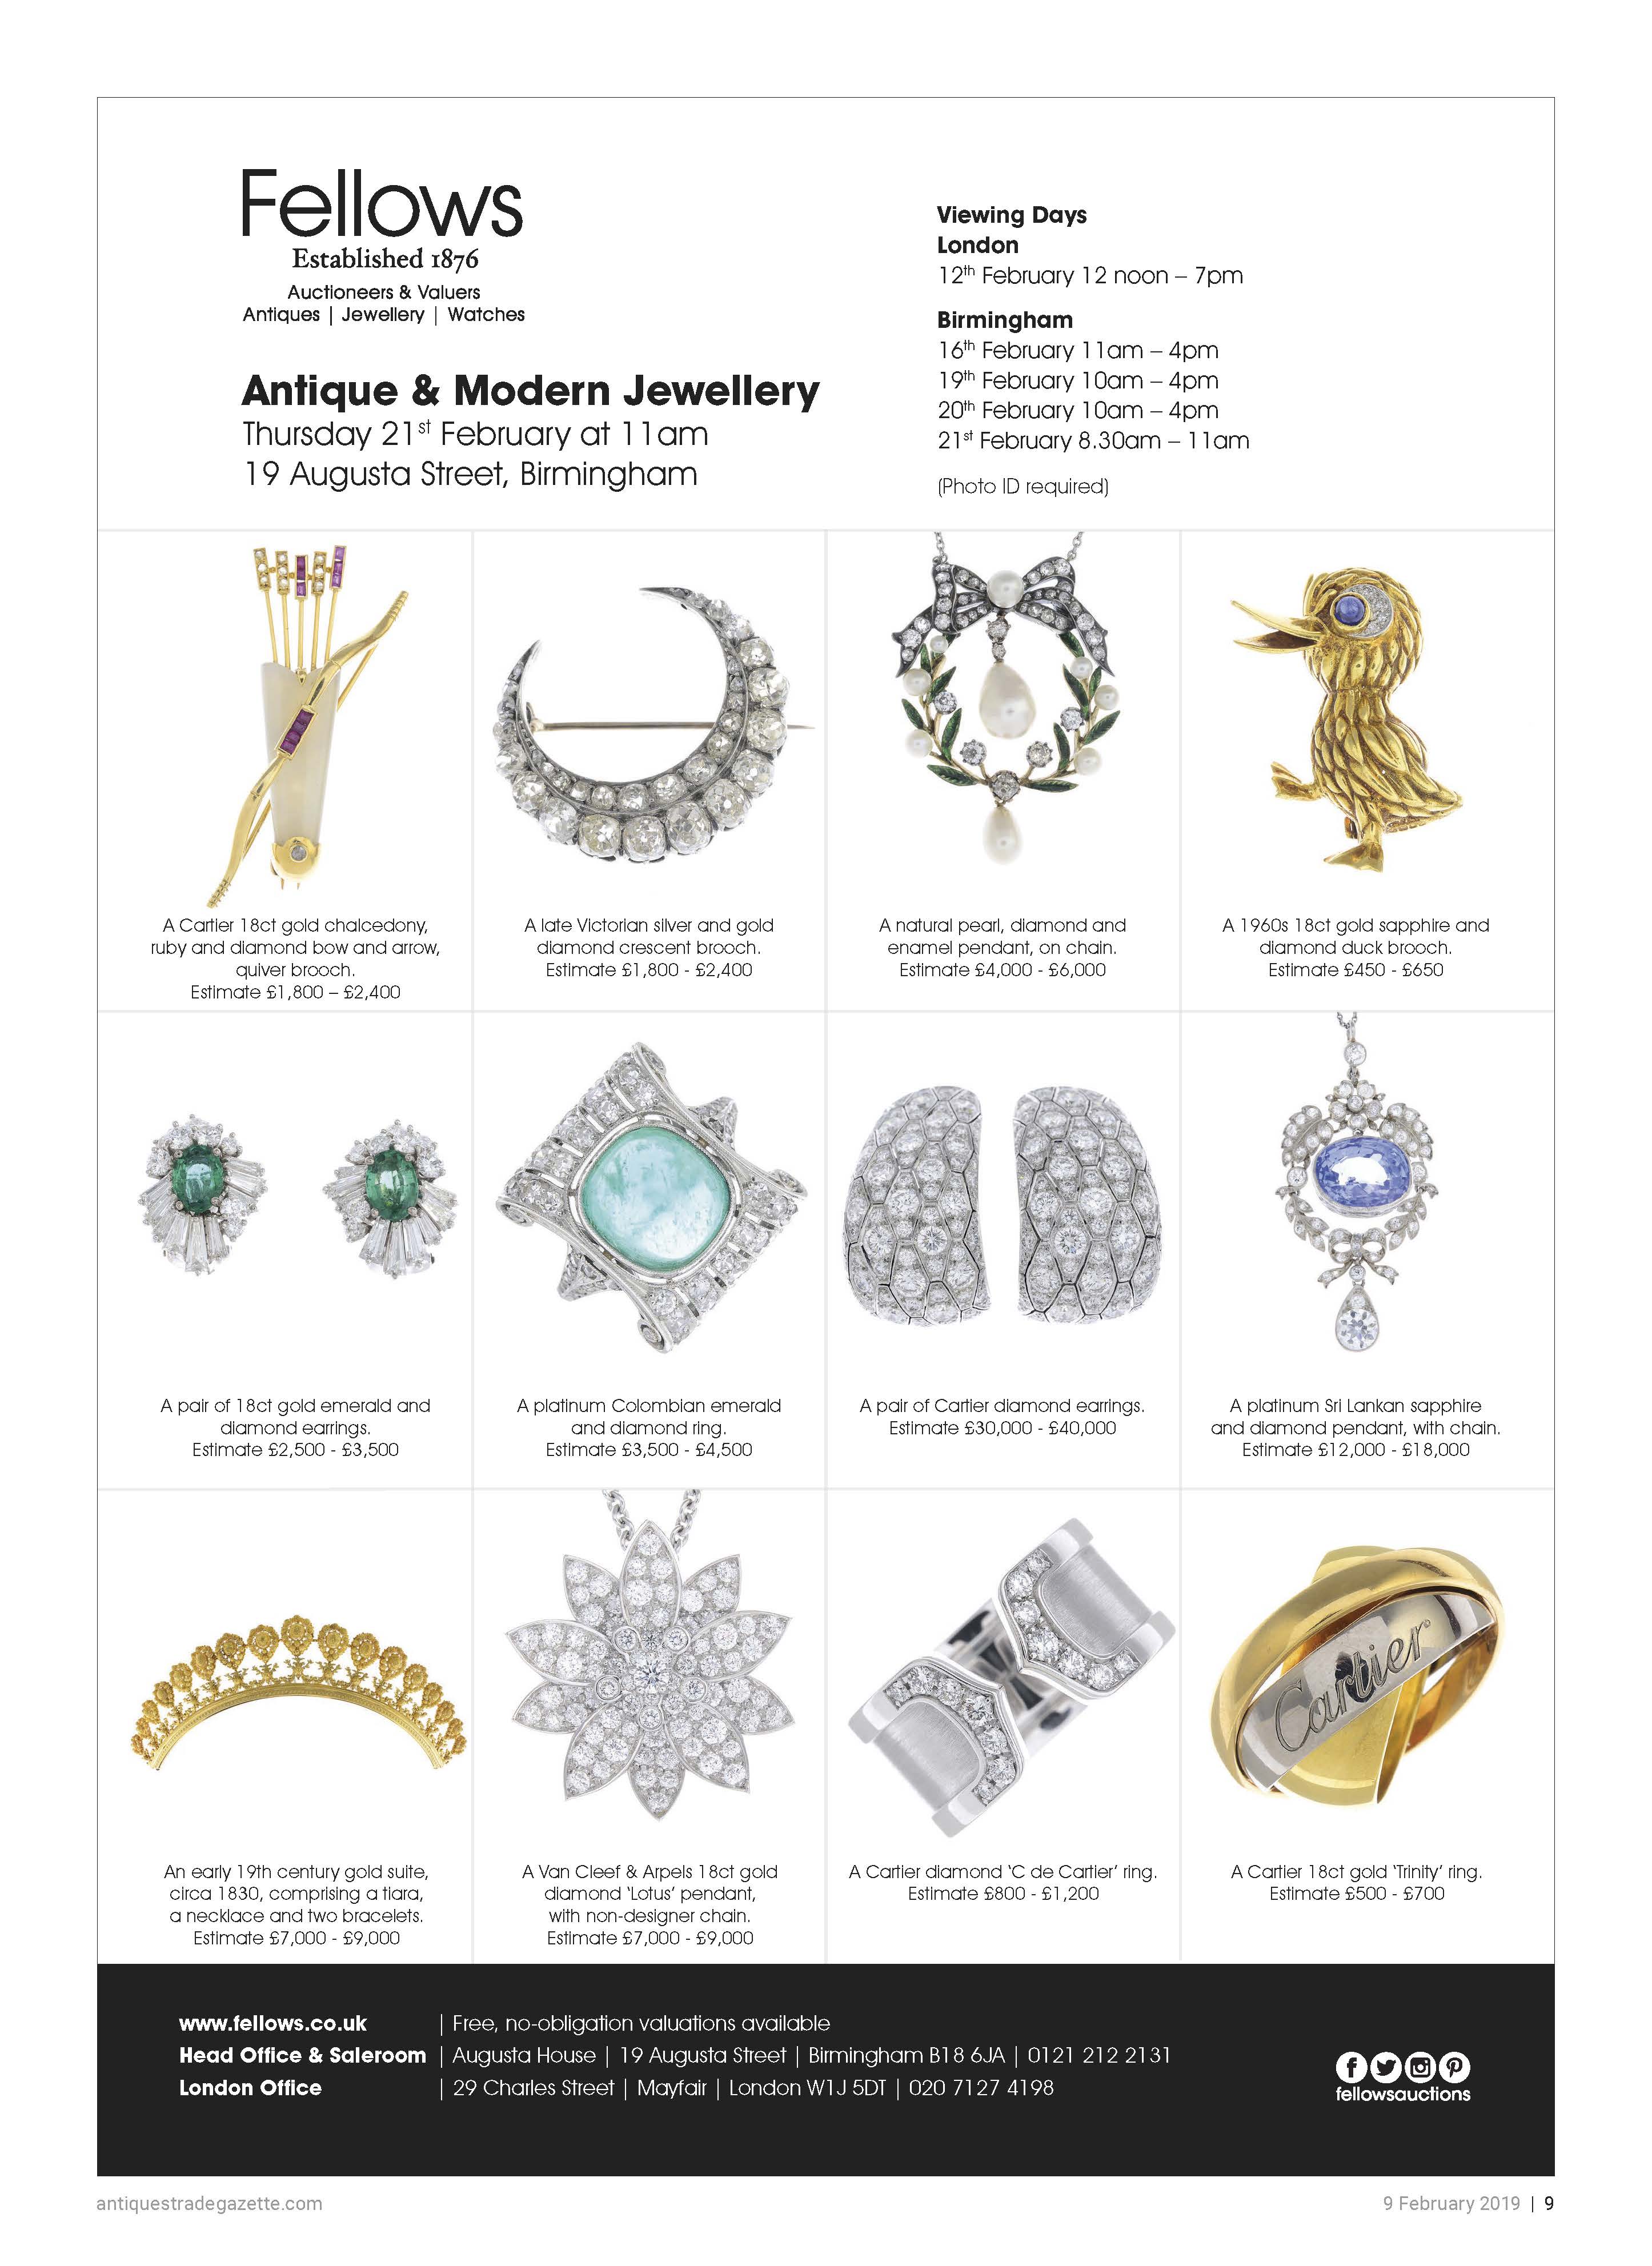 Fellows - Antique & Modern Jewellery.jpg